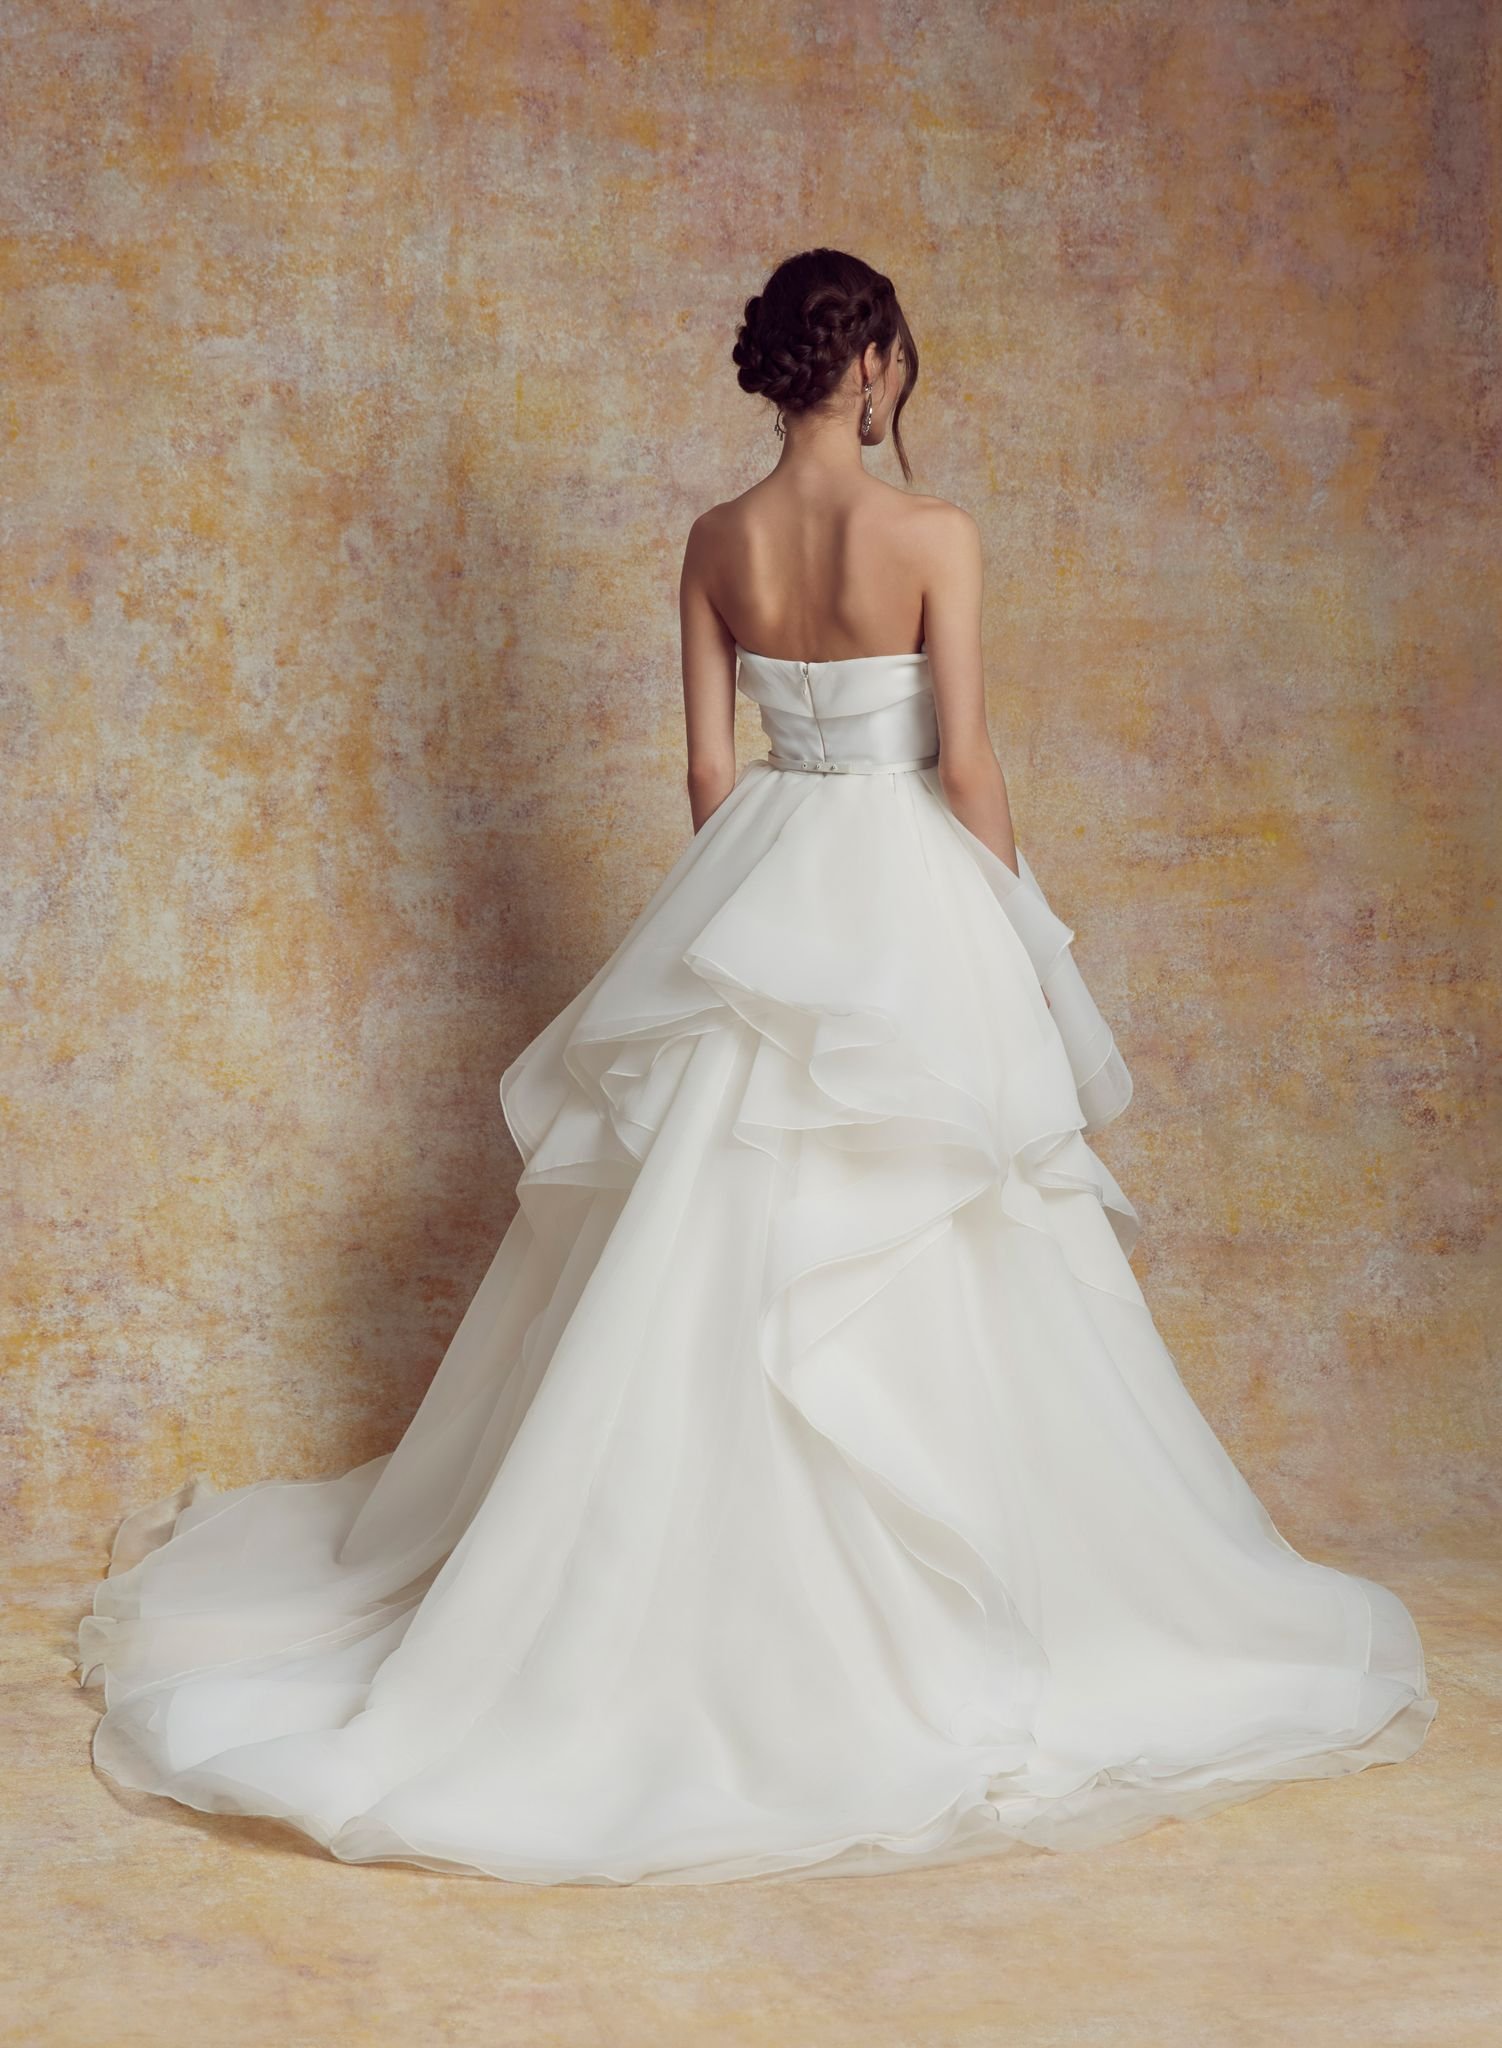 blanc-de-blanc-bridal-boutique-cleveland-dress-wedding-gown-Hailey..jpeg